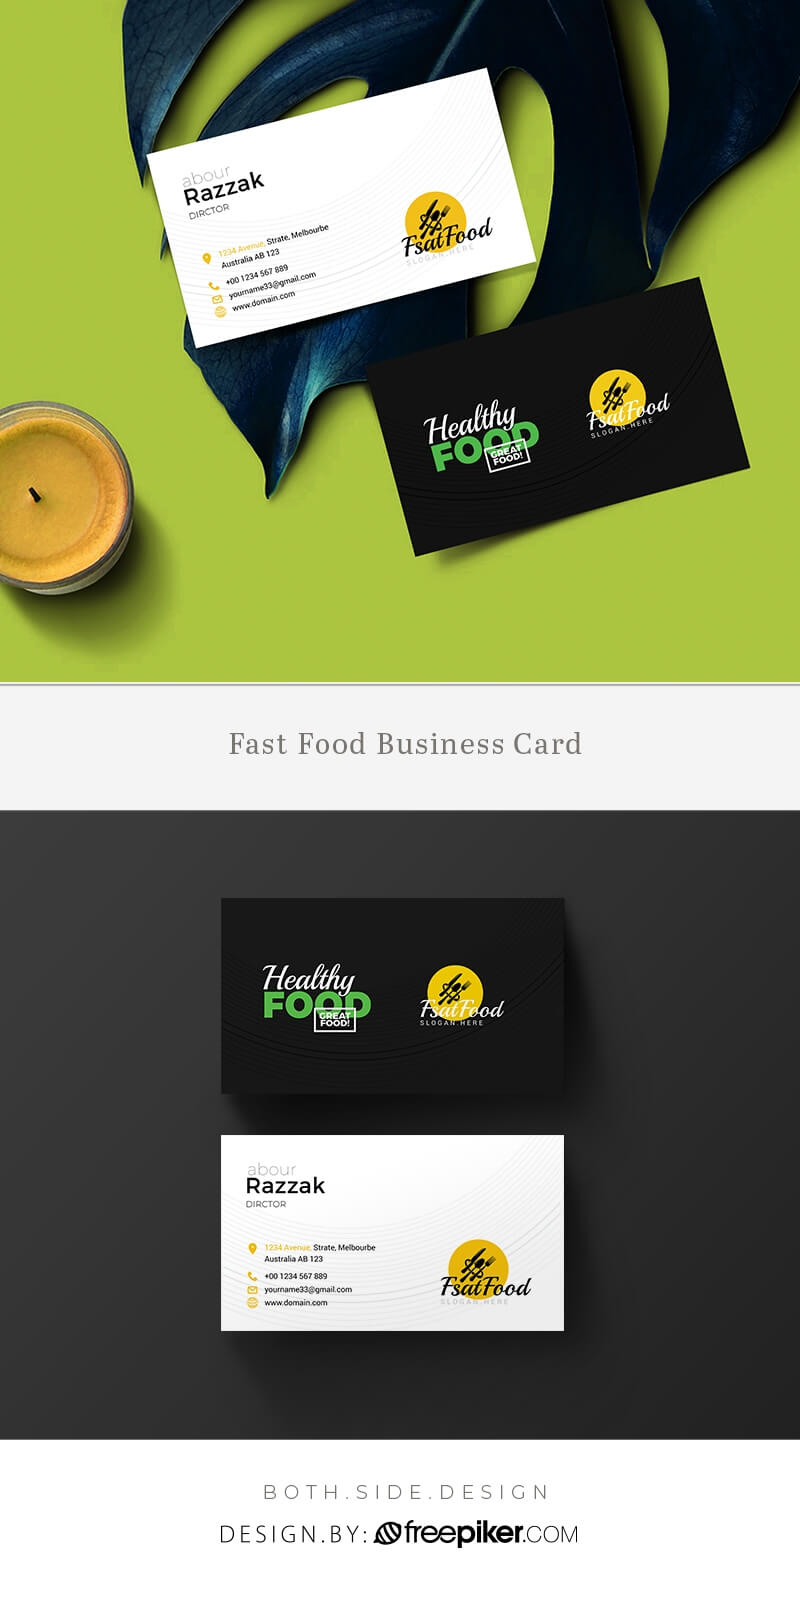 Freepiker | Food And Restaurant Business Card Template In Restaurant Business Cards Templates Free